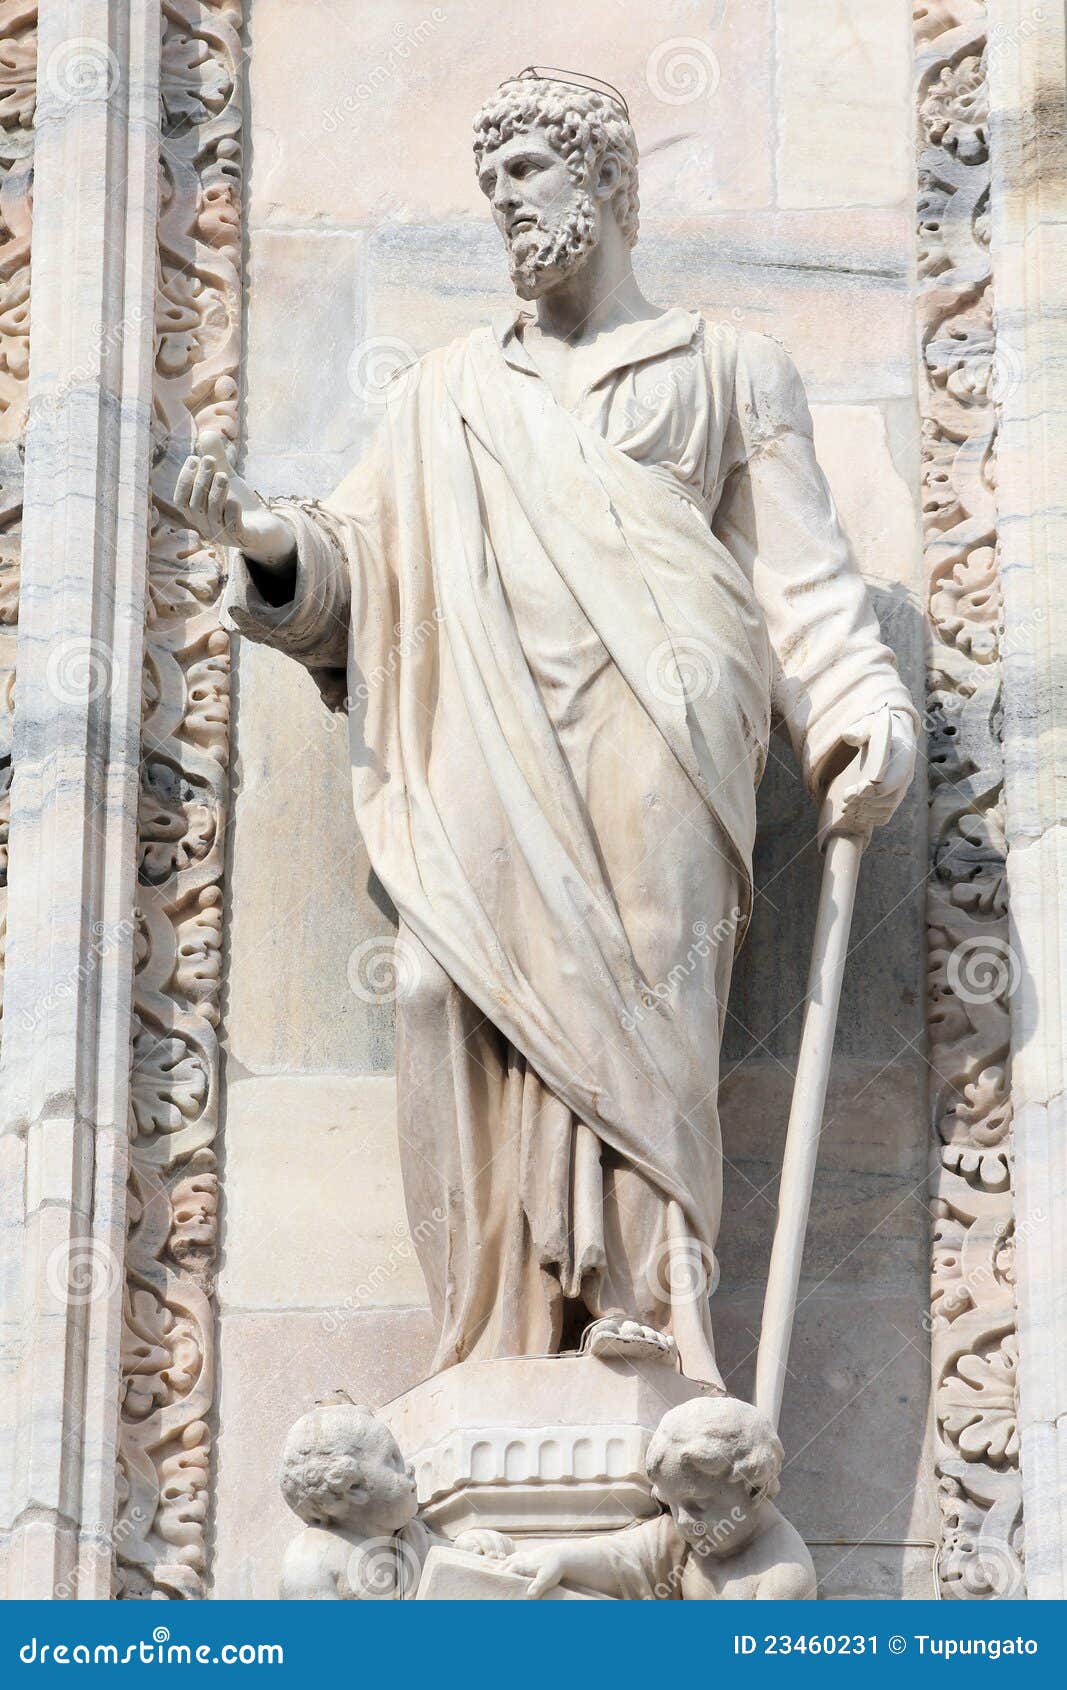 saint justin statue